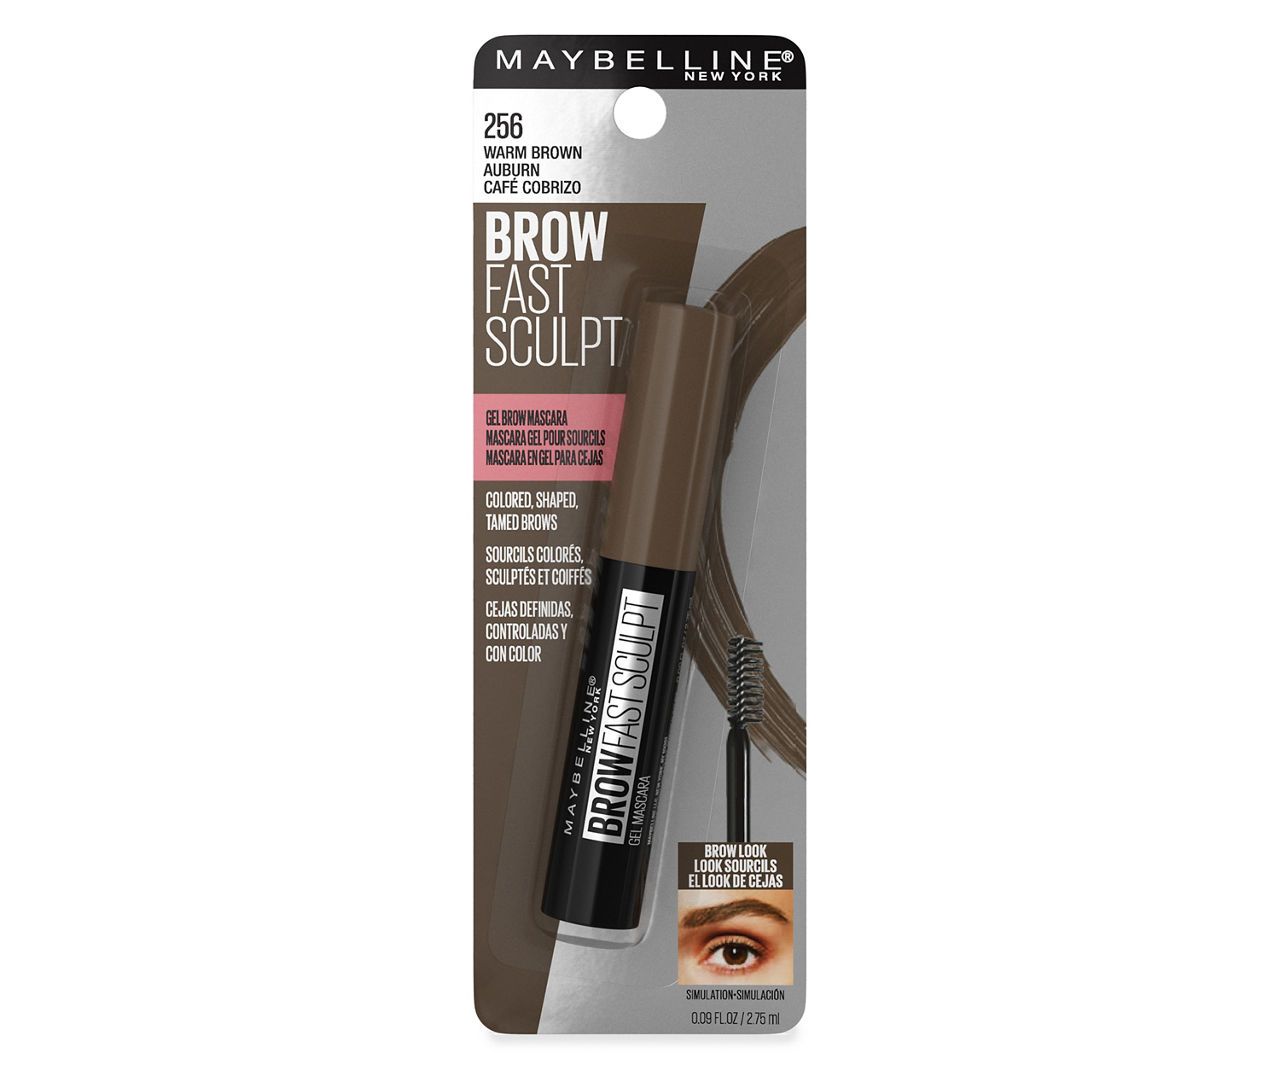 Maybelline Brow Fast Sculpt, Shapes Eyebrows, Eyebrow Mascara Makeup, Warm Brown, 0.09 fl. oz.